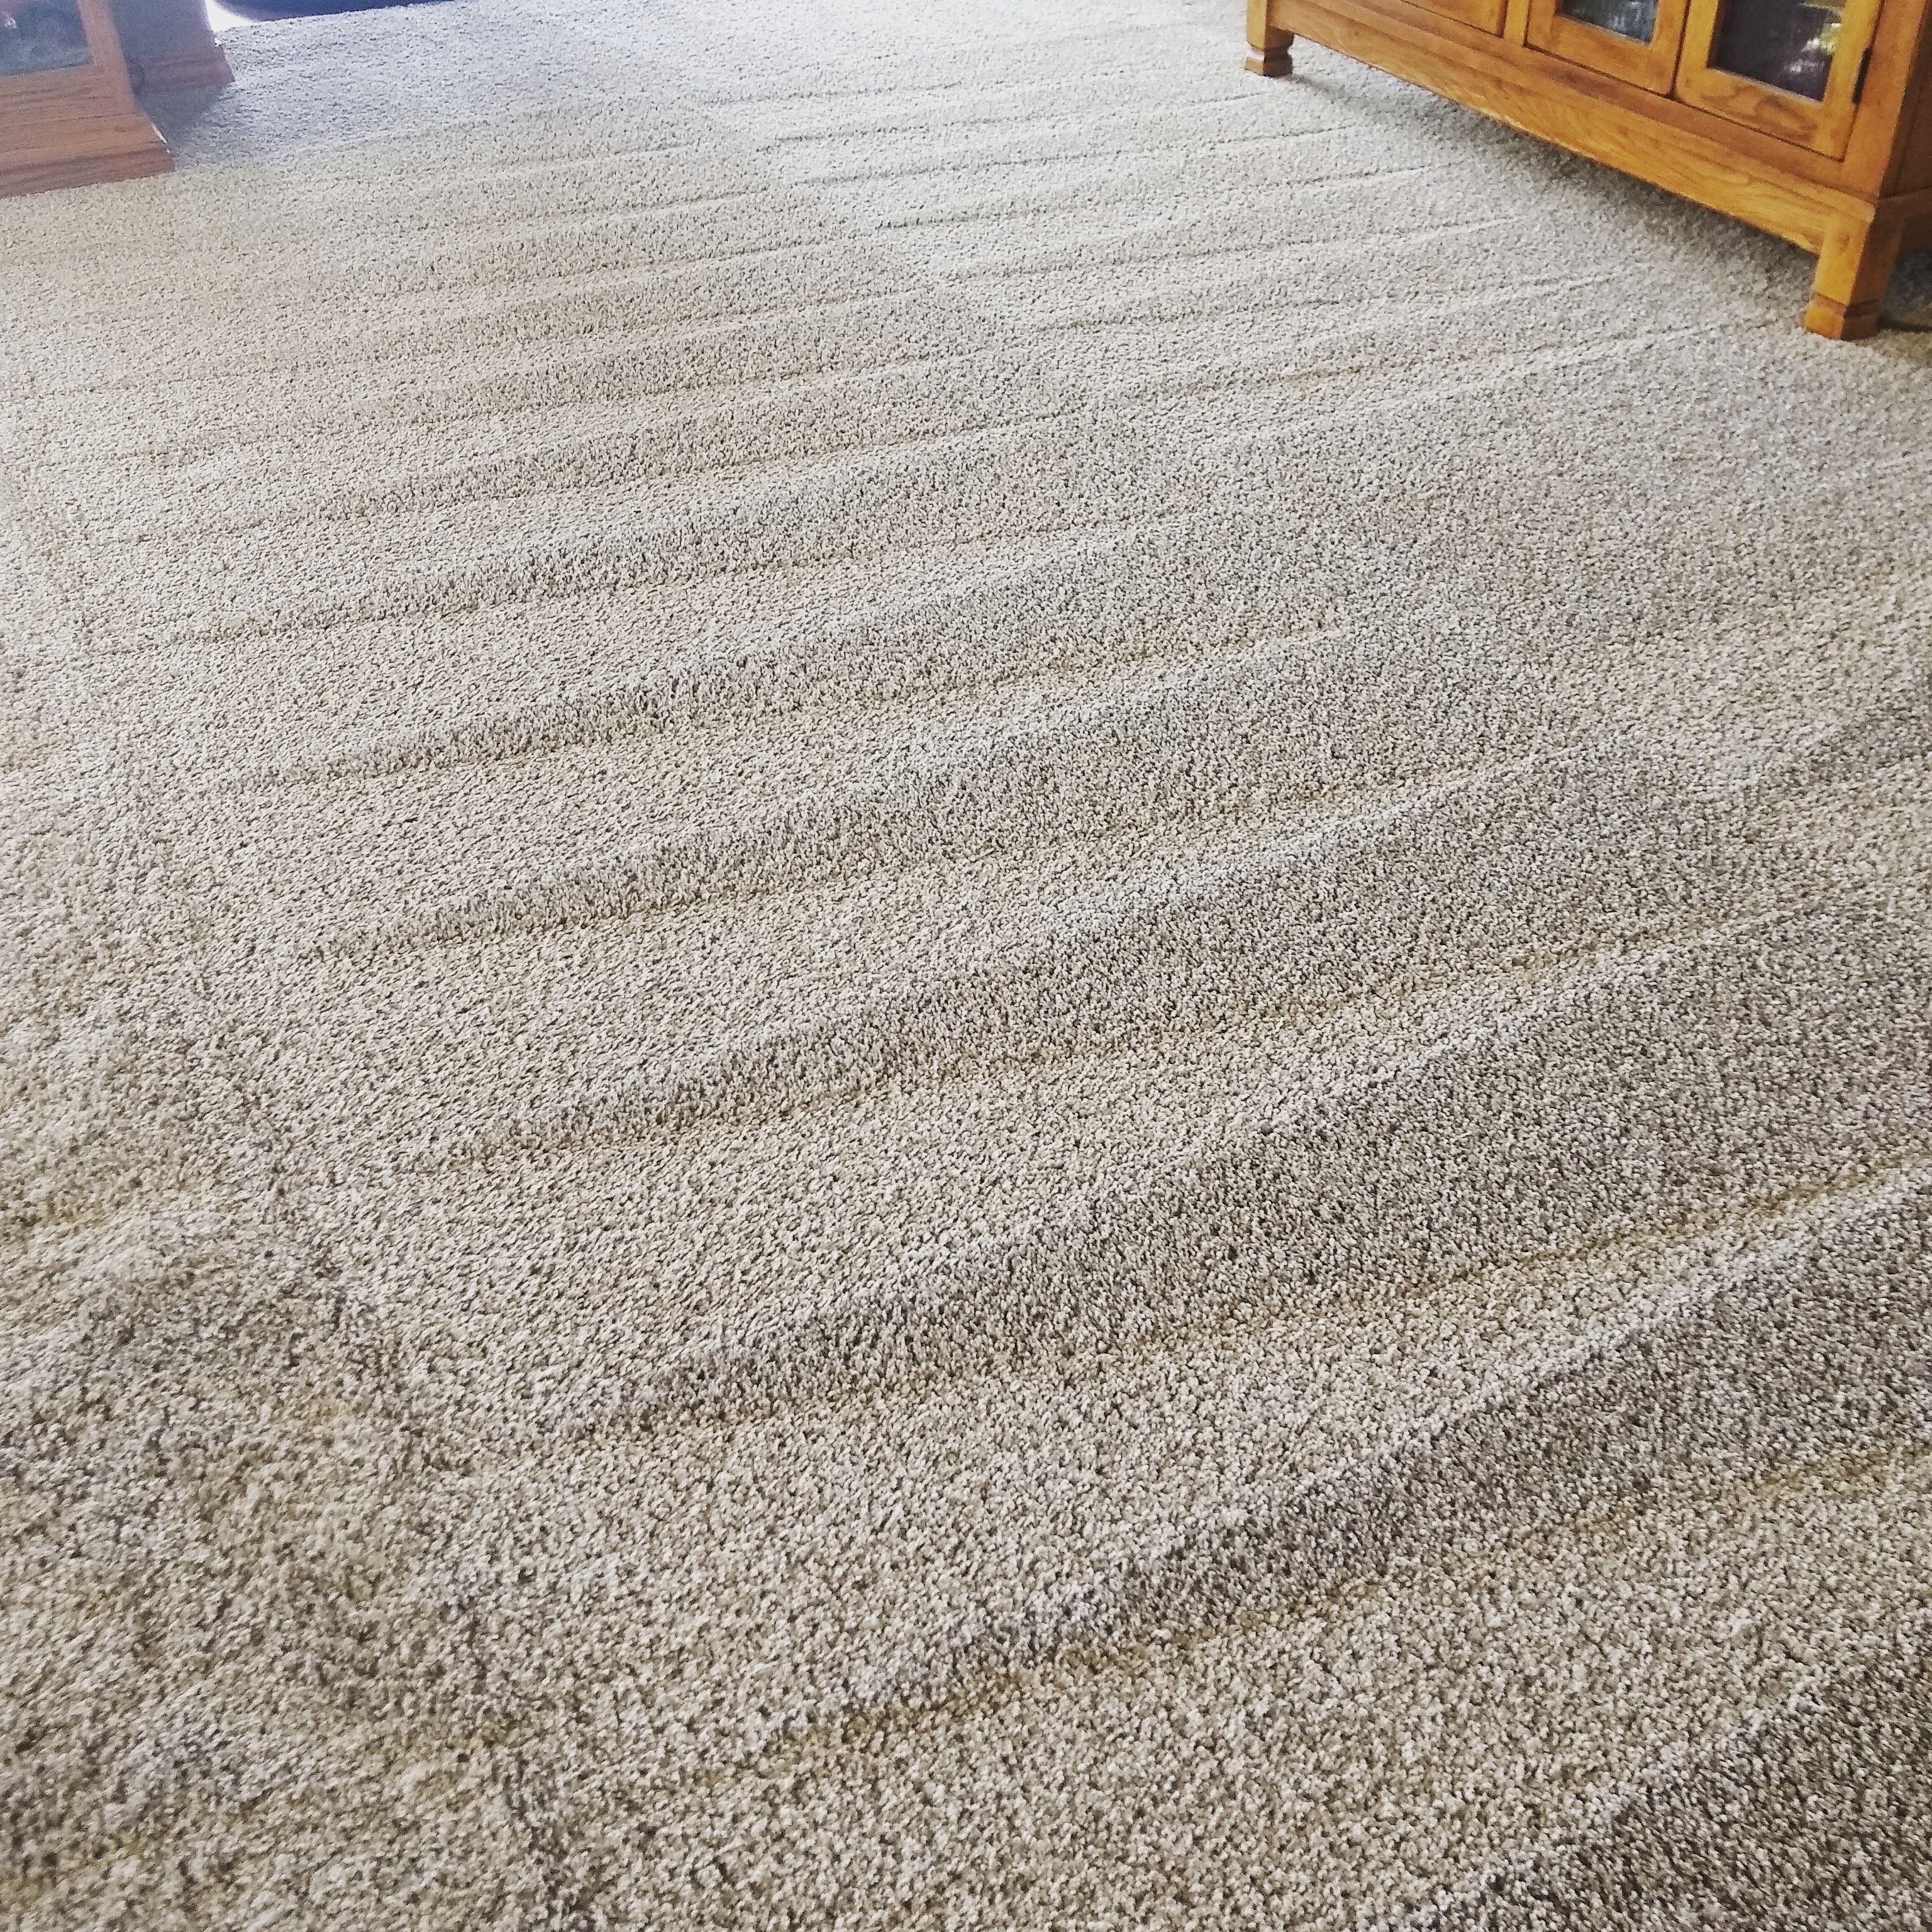 Residential Carpet Cleaning in Morris, Minnesota